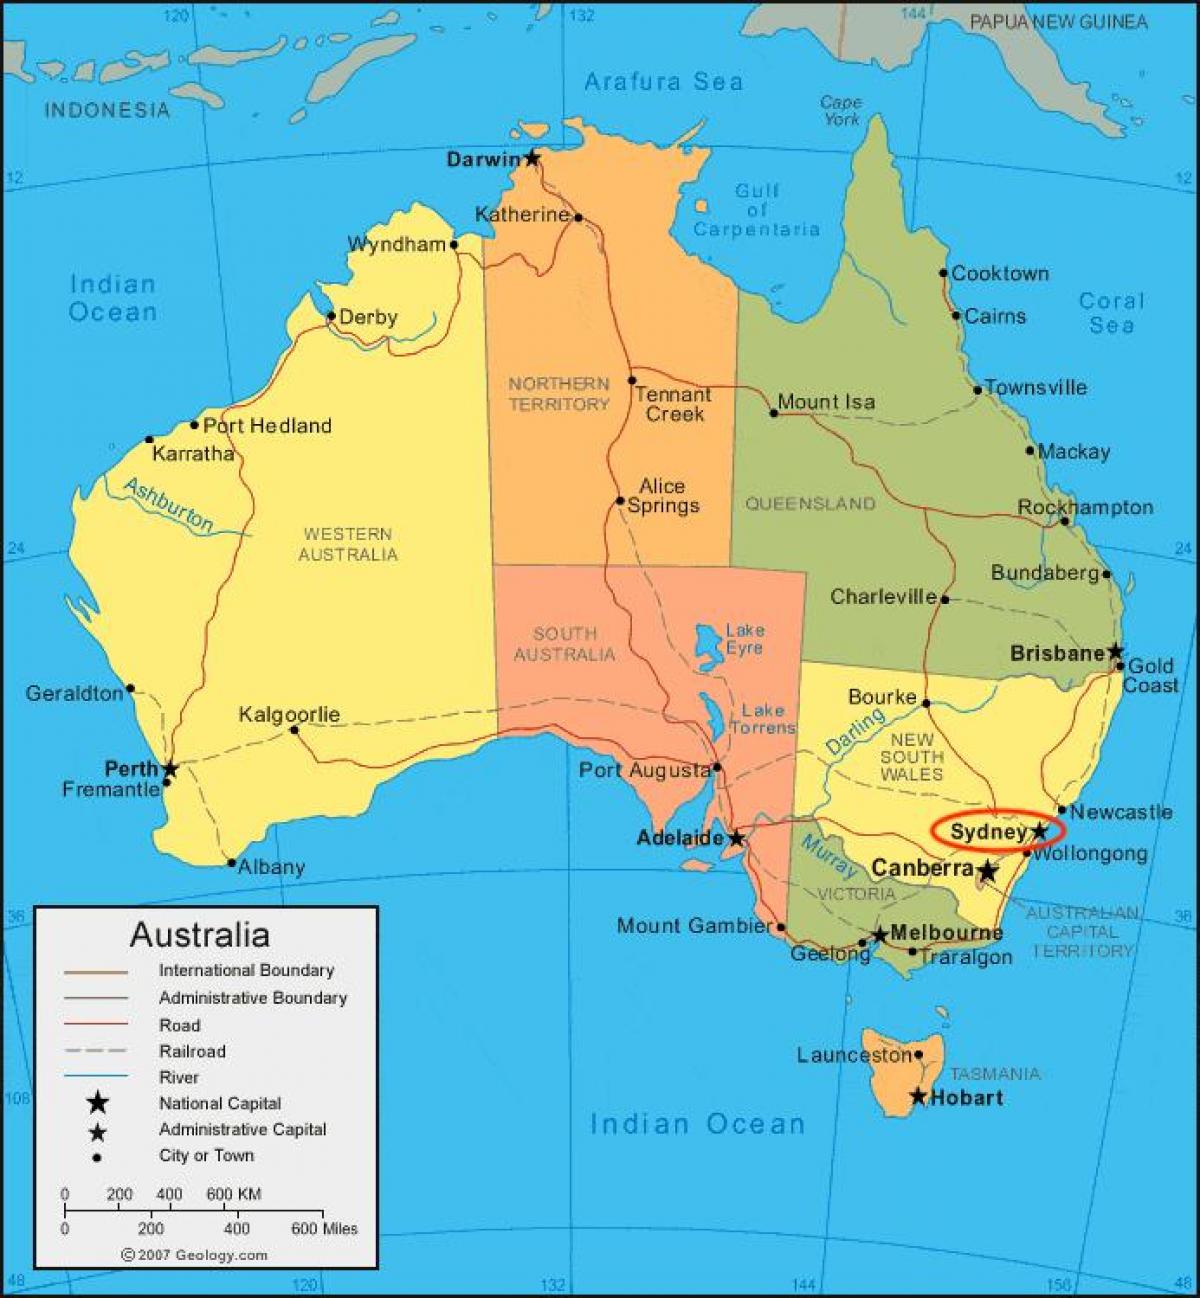 Sydney on Australia map